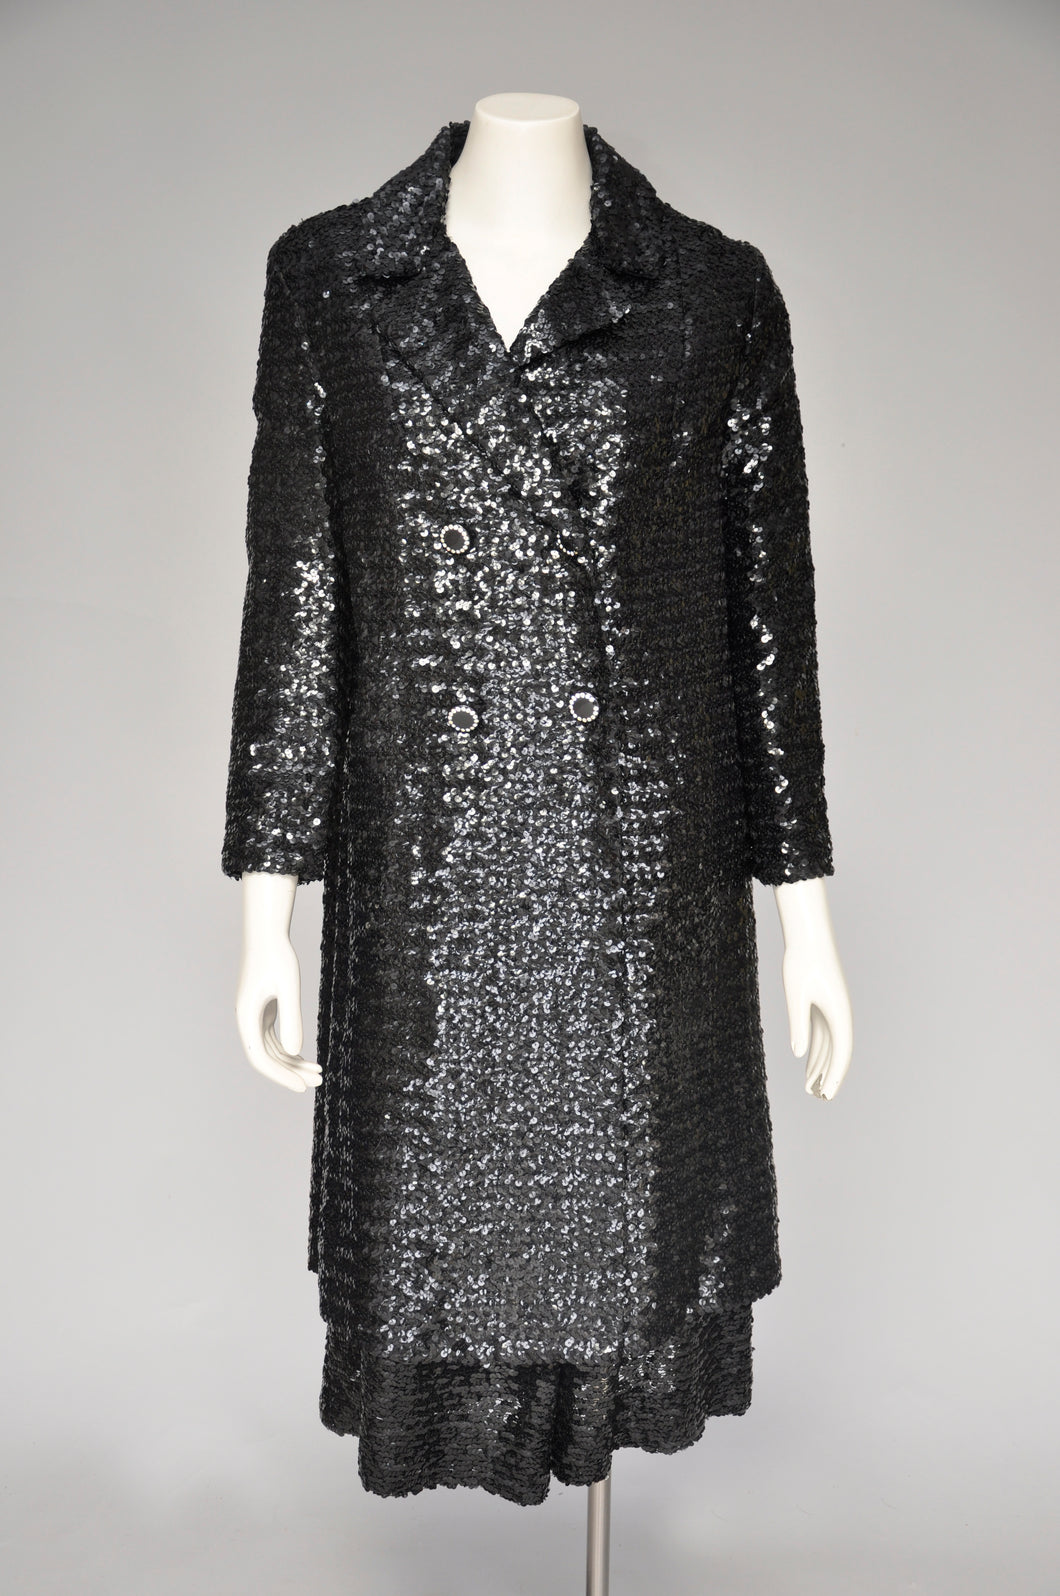 vintage 1950s 1960s black sequin skirt w/ matching coat M